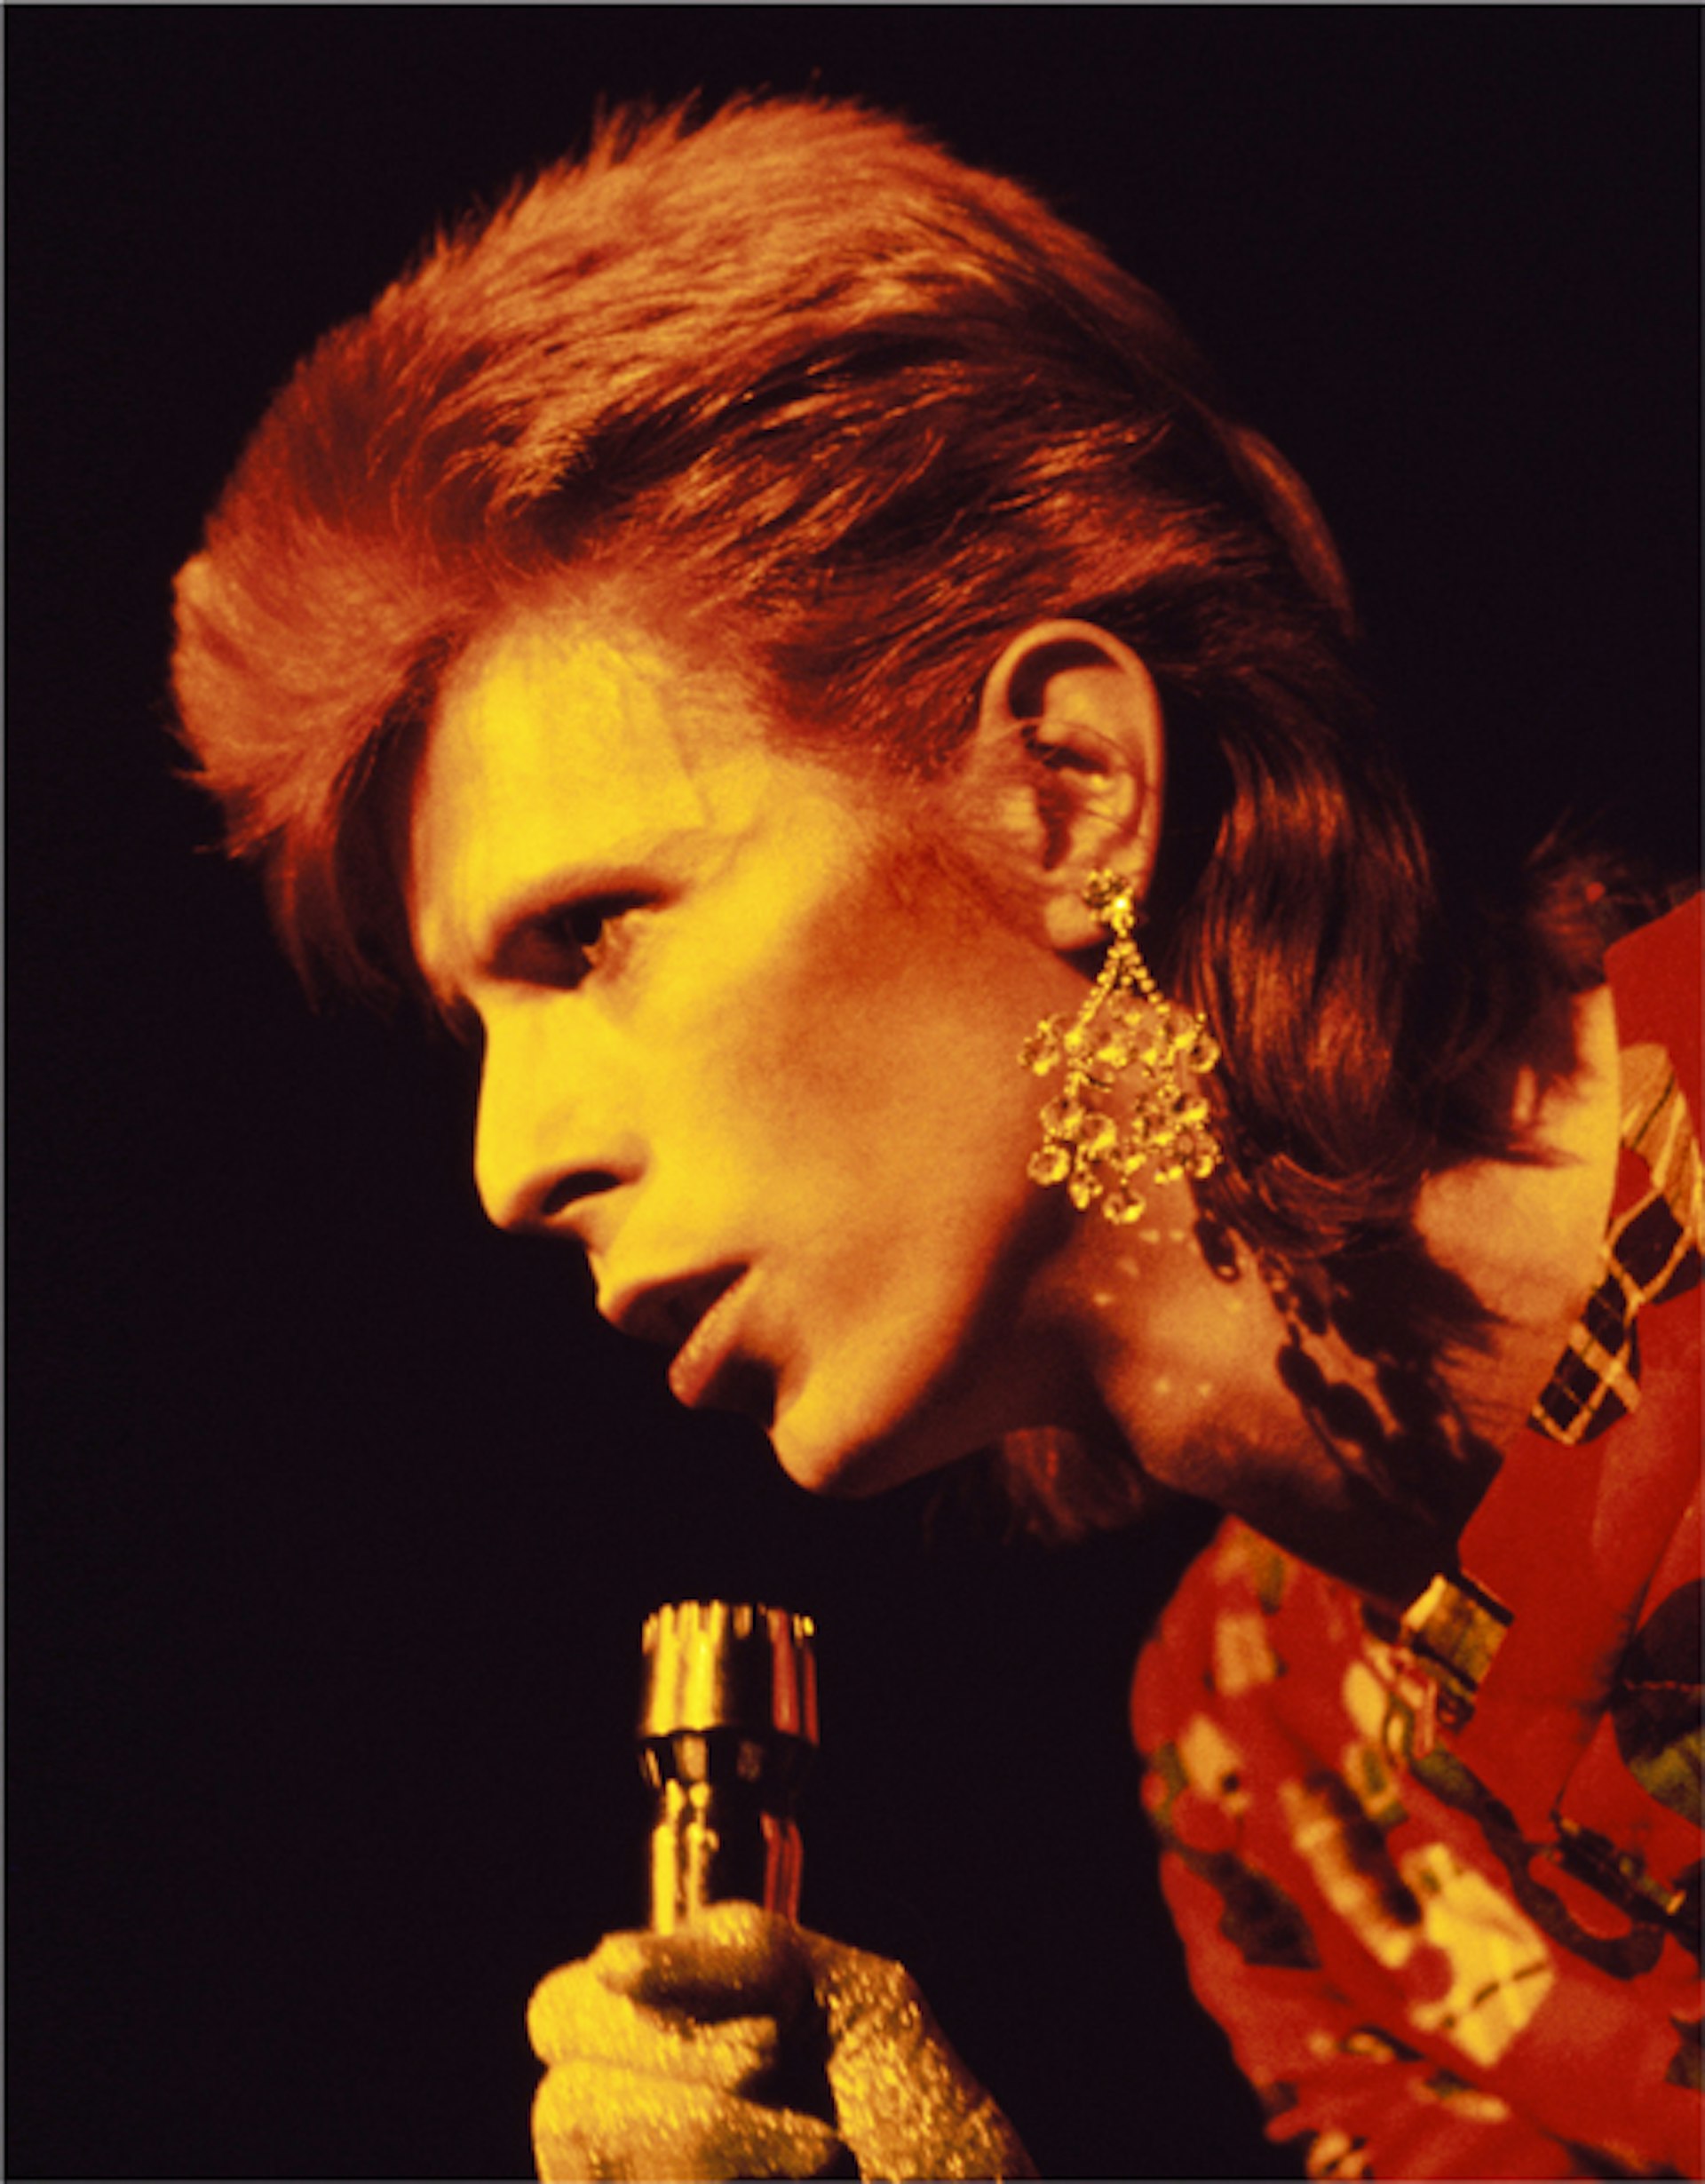 David Bowie, Scotland, 1973, © Mick Rock / courtesy The Print Room 